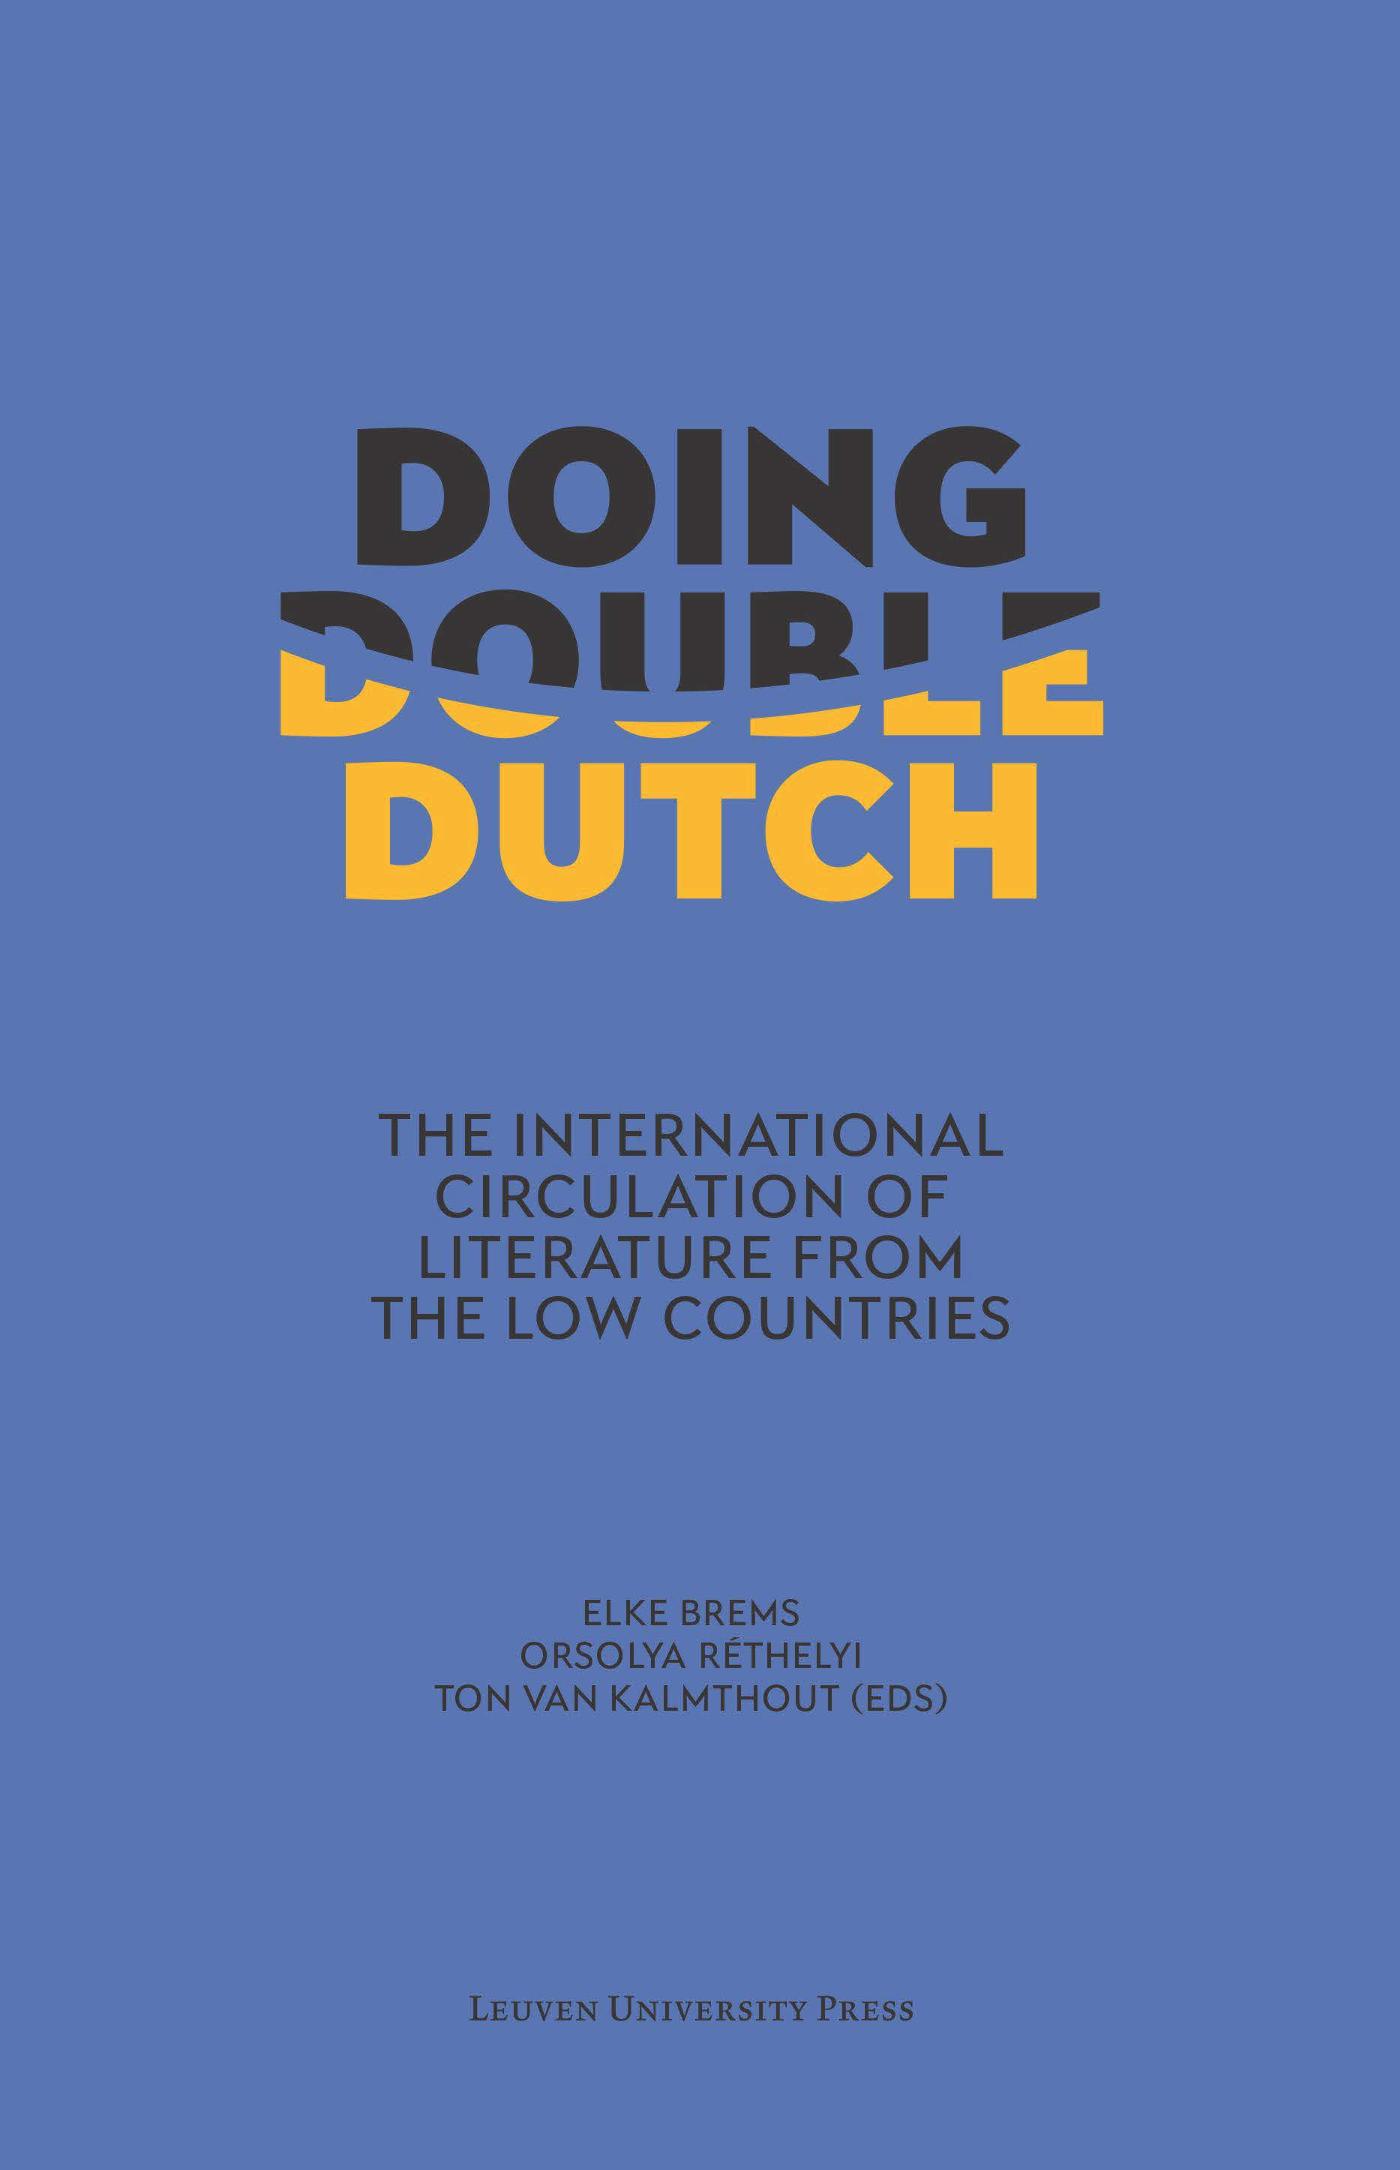 Doing Double Dutch (Ebook)